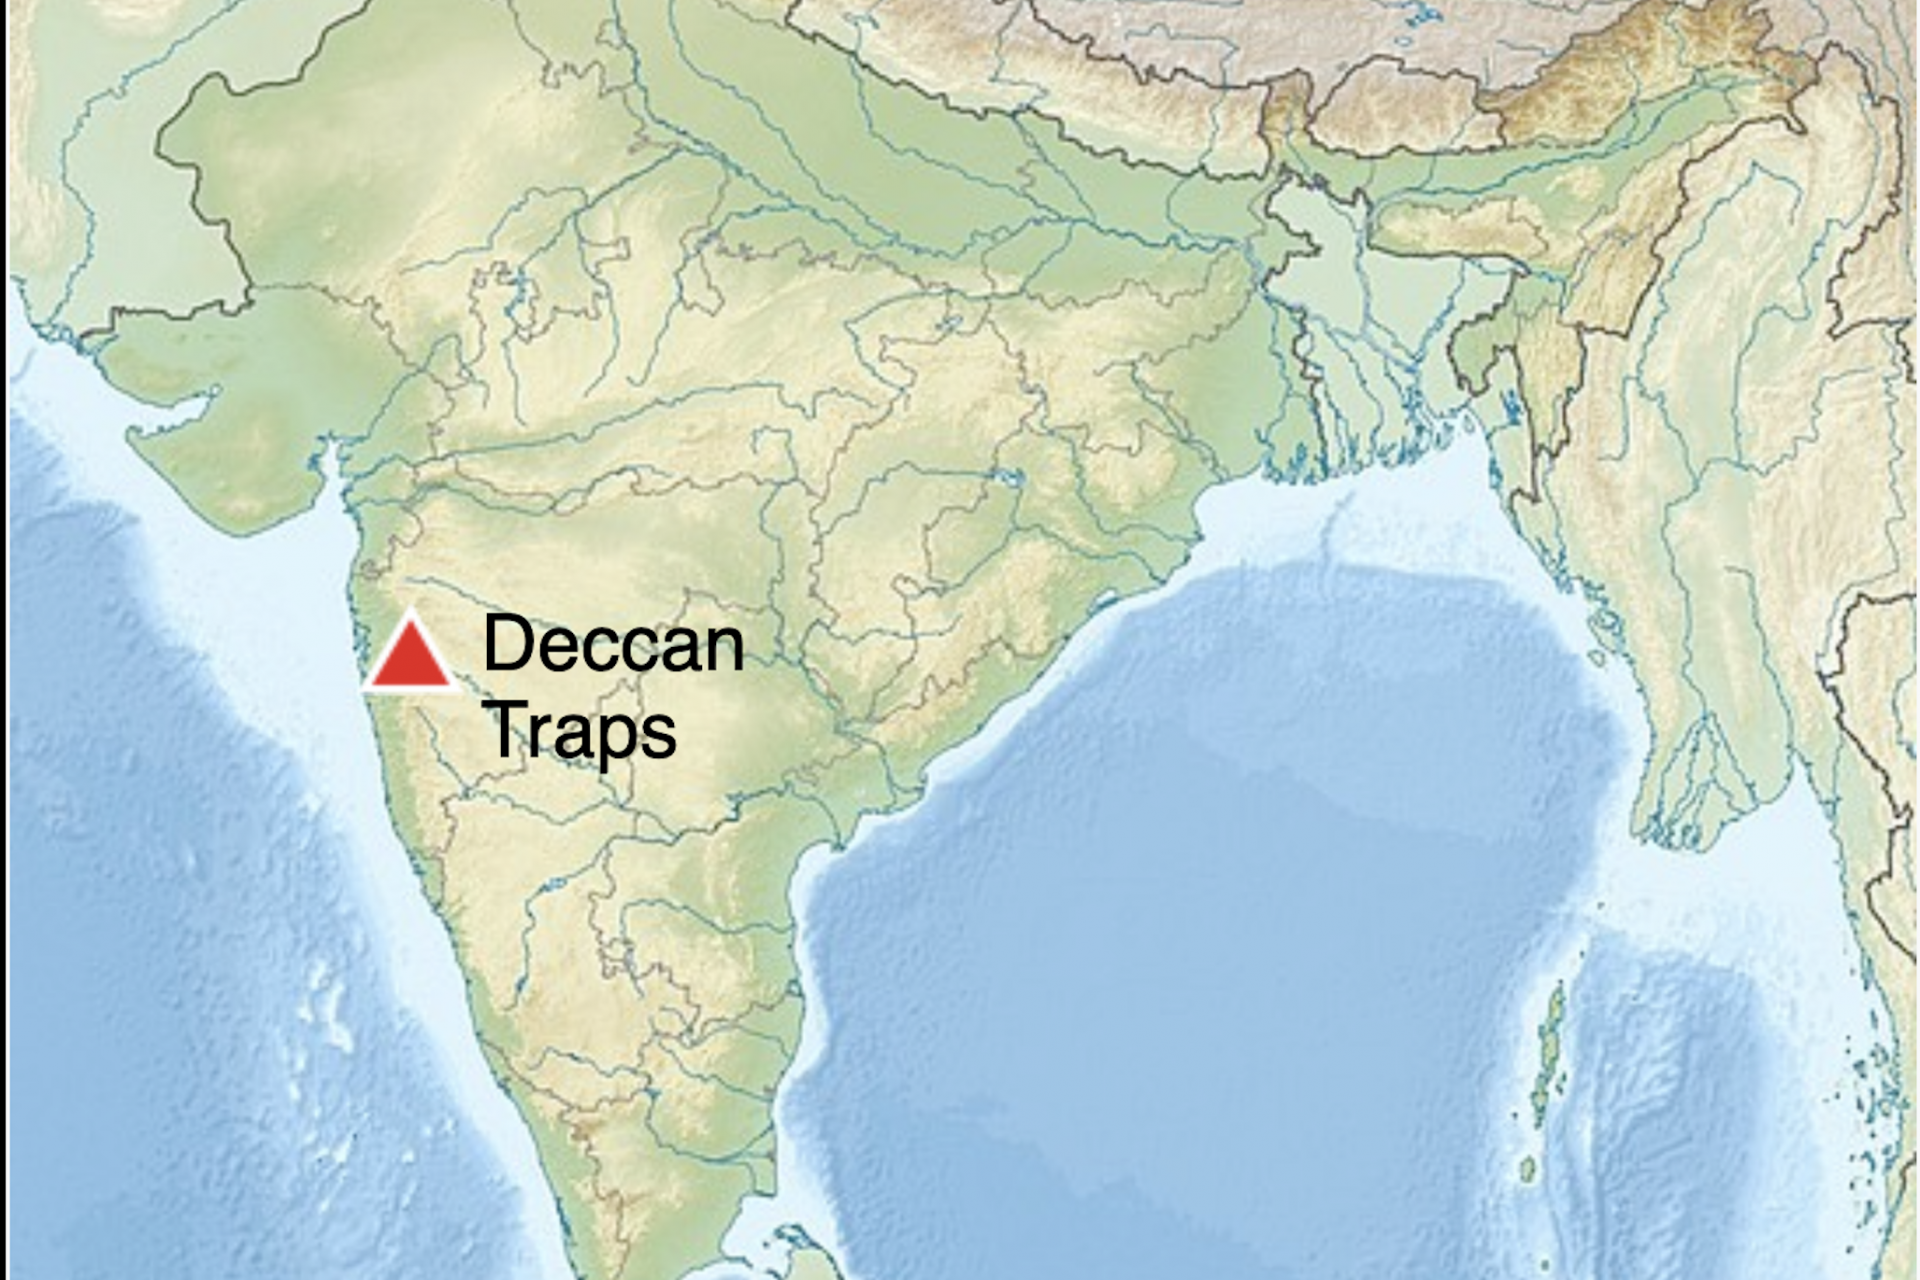 What are the Deccan Traps?